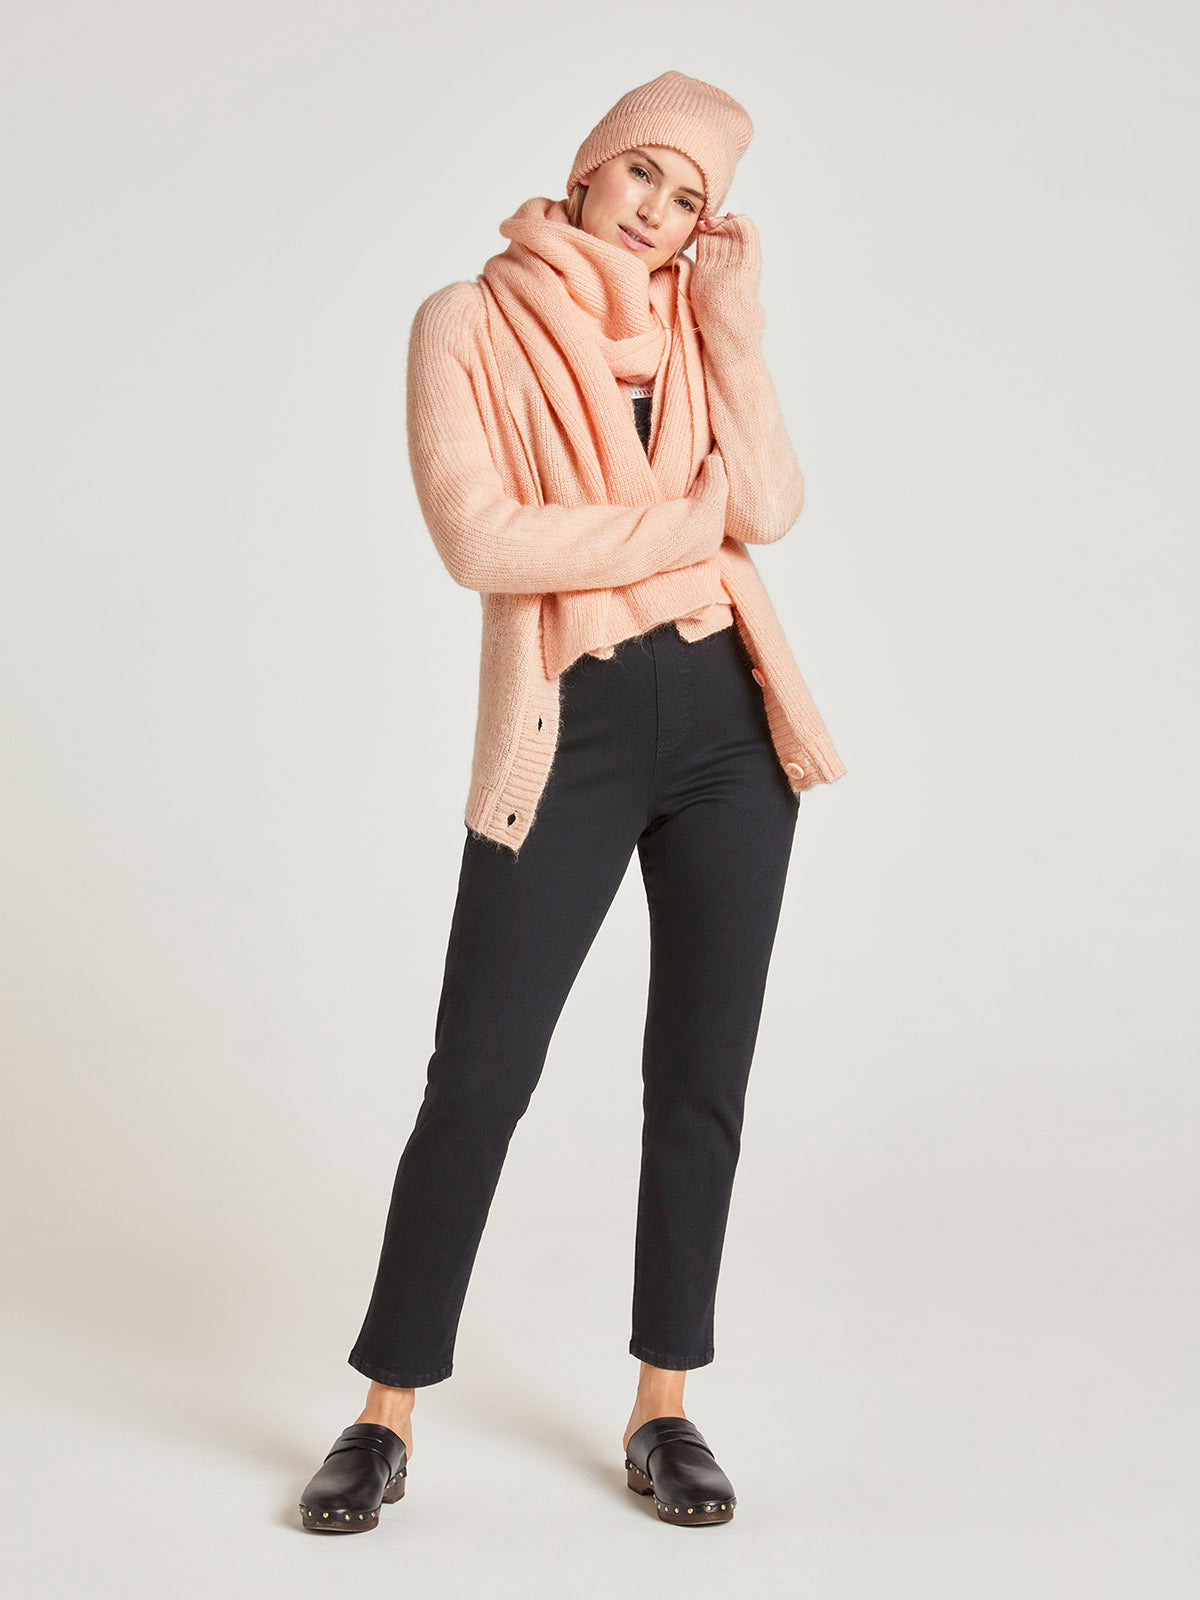 Zola Wool Blend Knit Beanie - Peach Bellini Orange